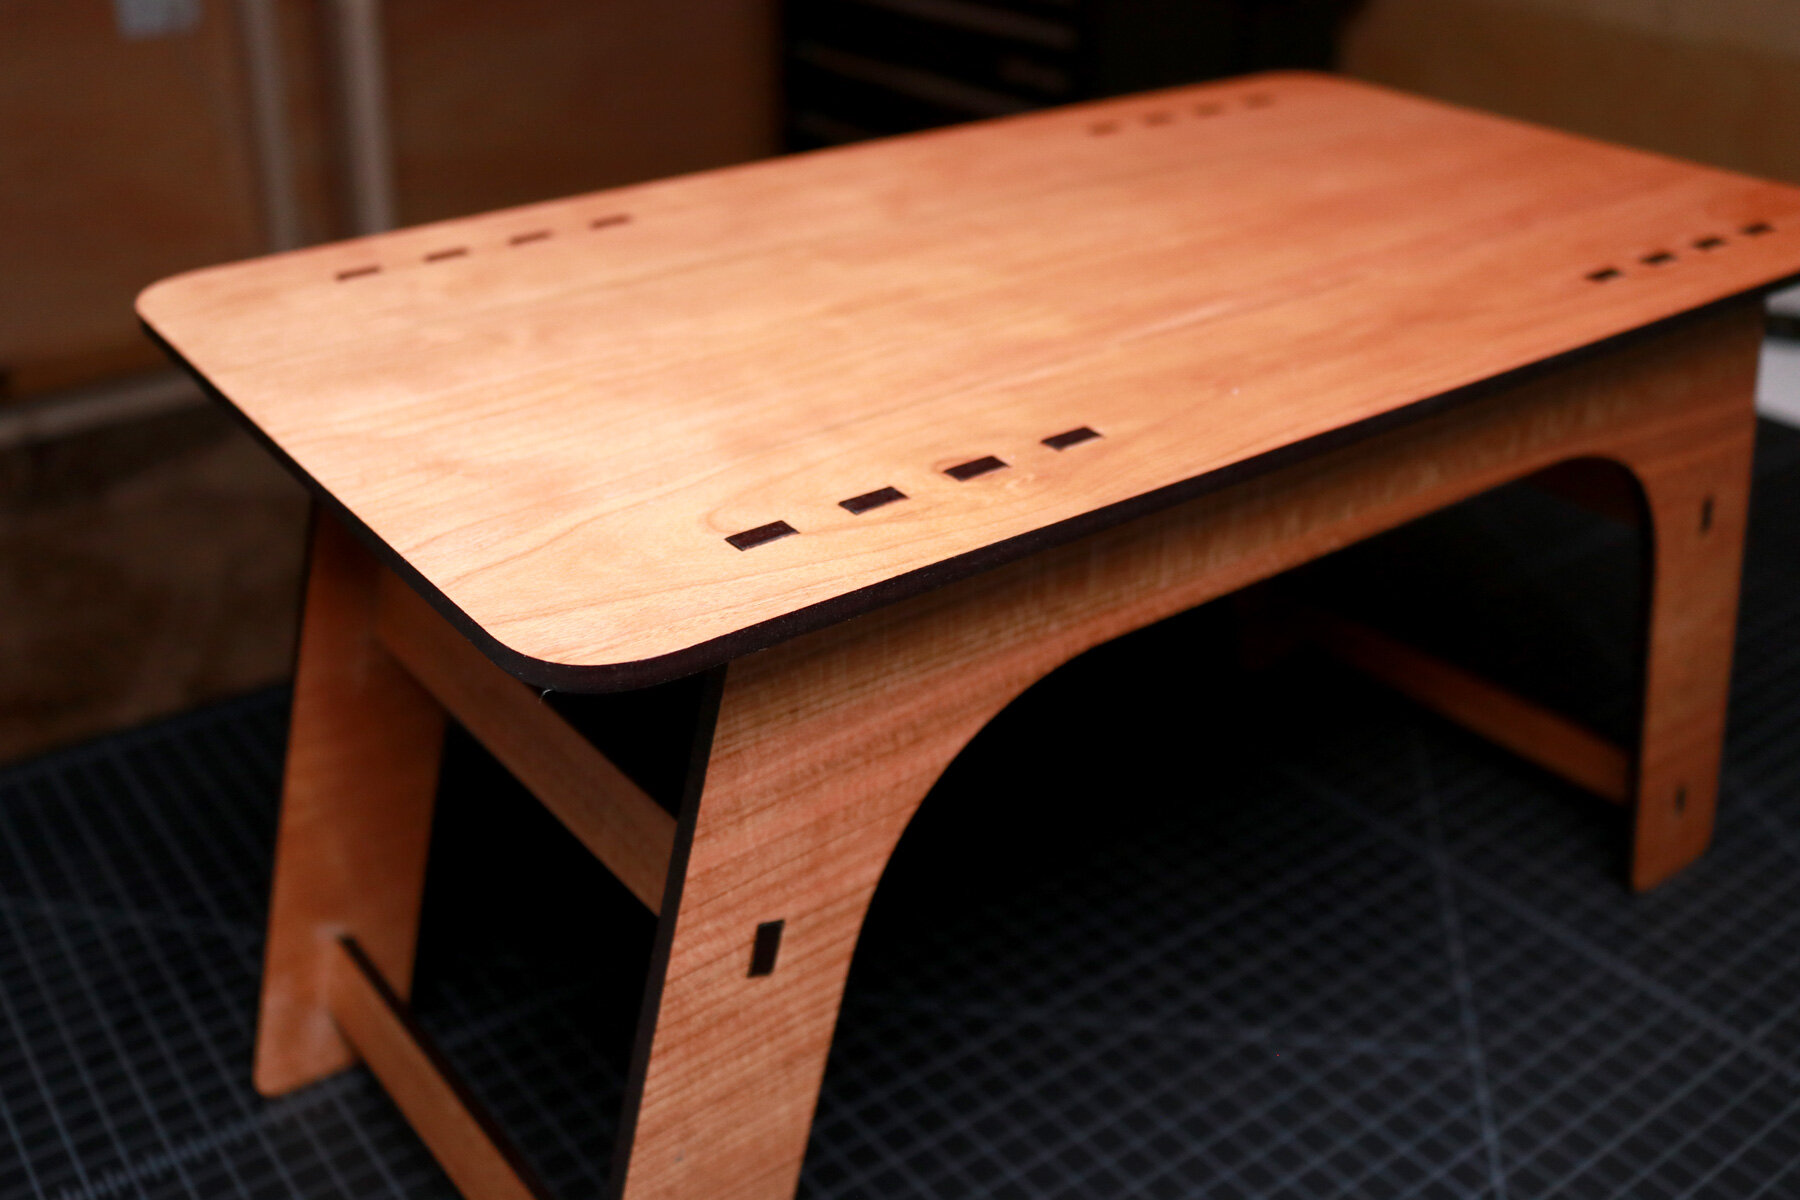 041_Minimal-Personal-Wood-Table-05.jpg